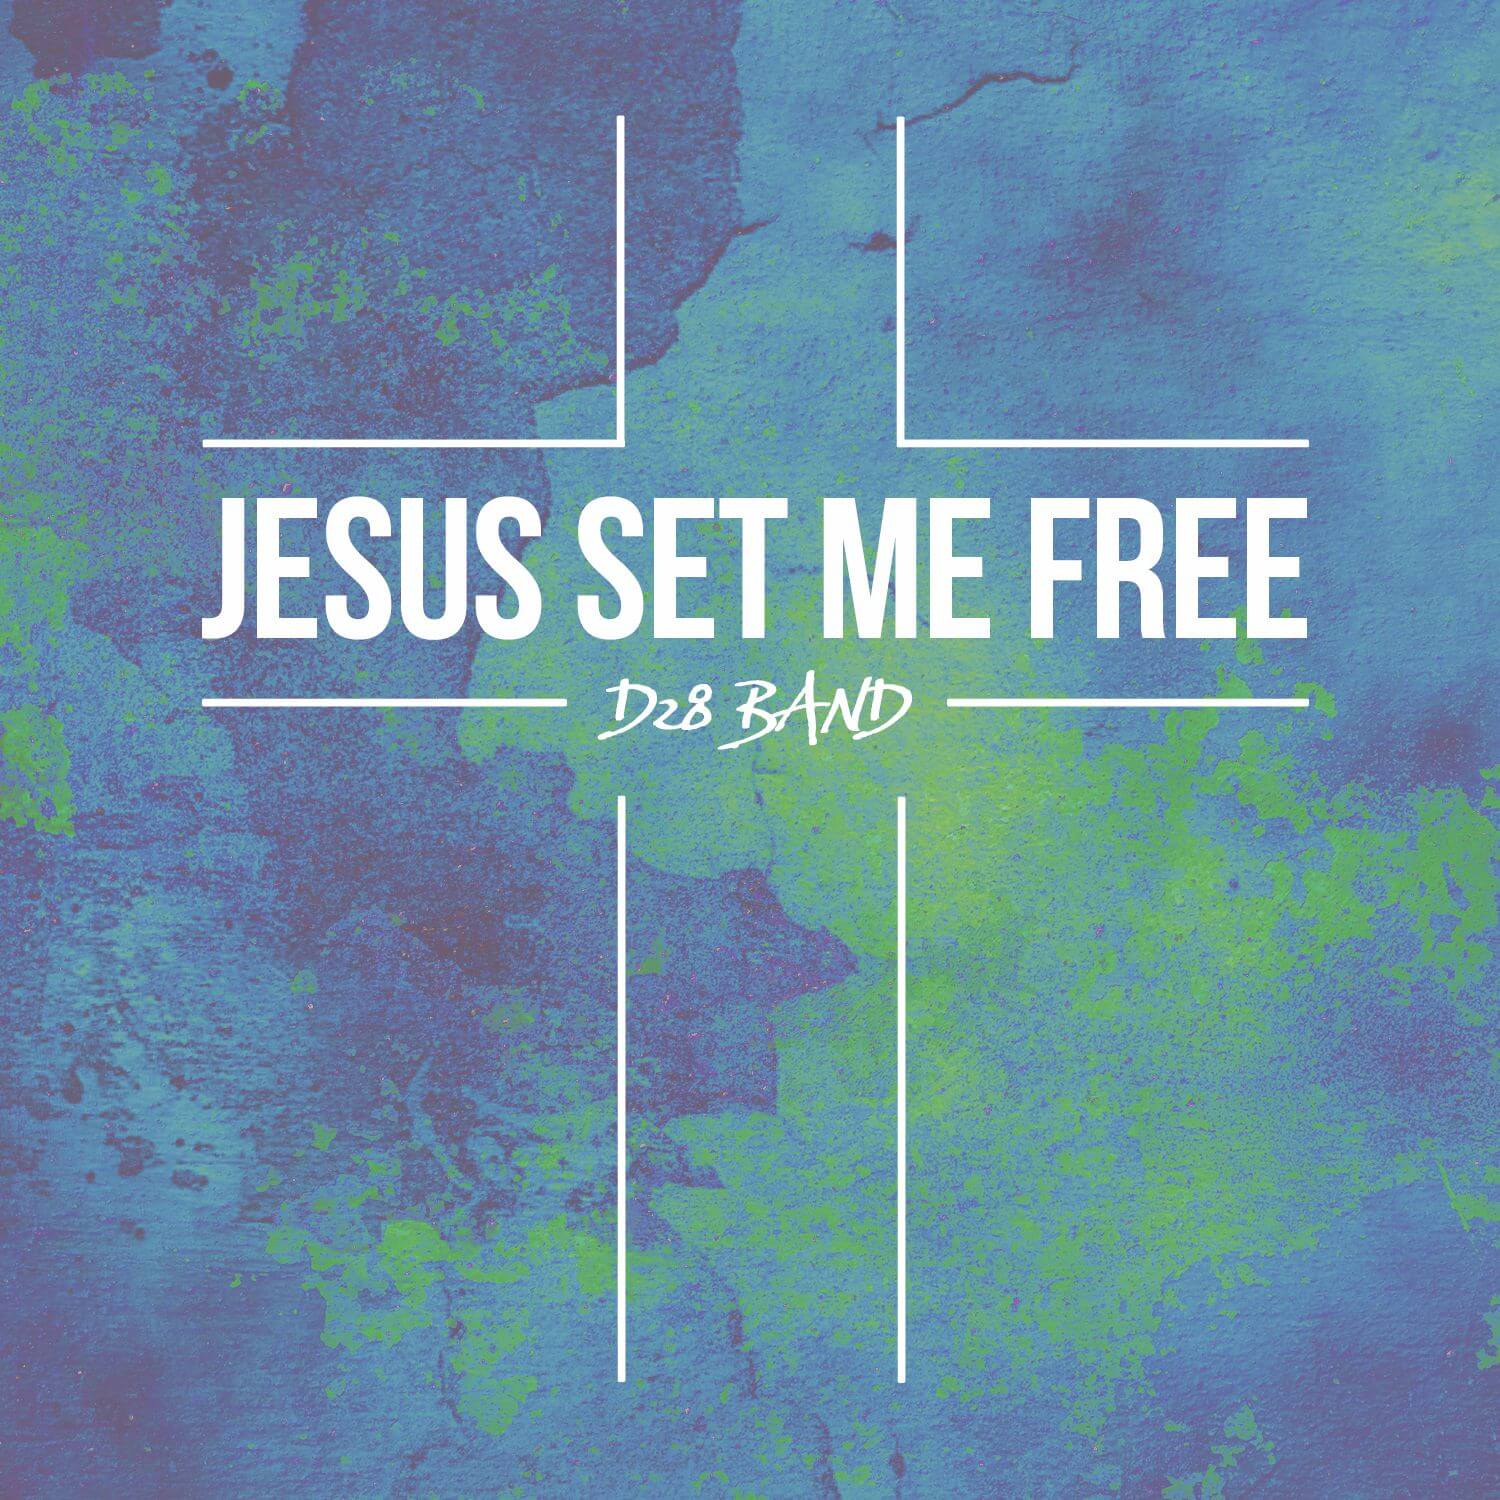 D28 Band - Jesus Set Me Free